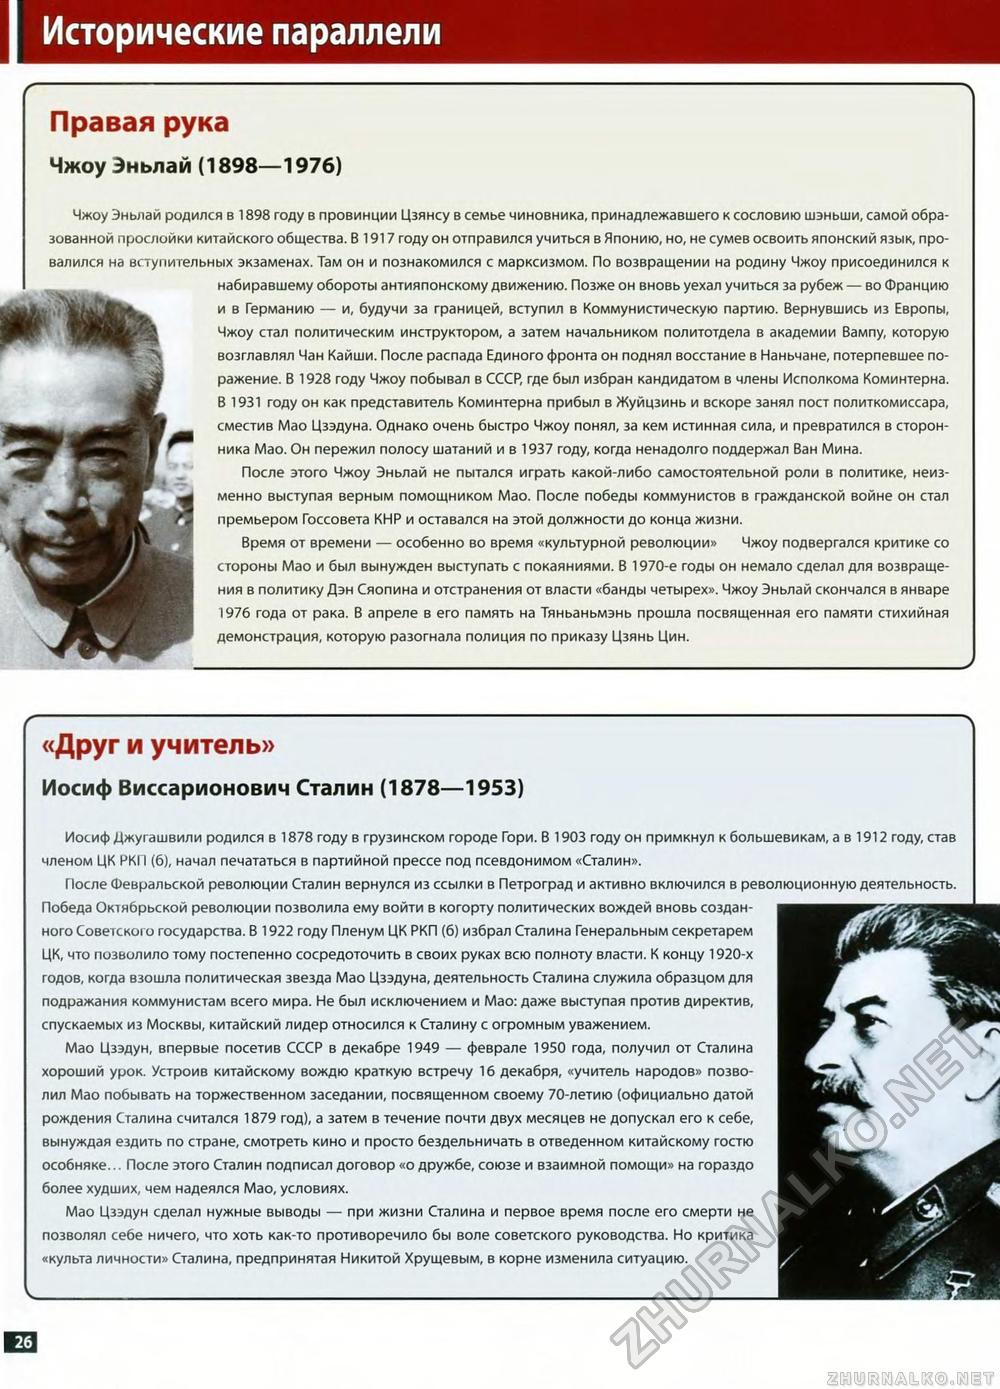 80. Мао Цзэдун, страница 26